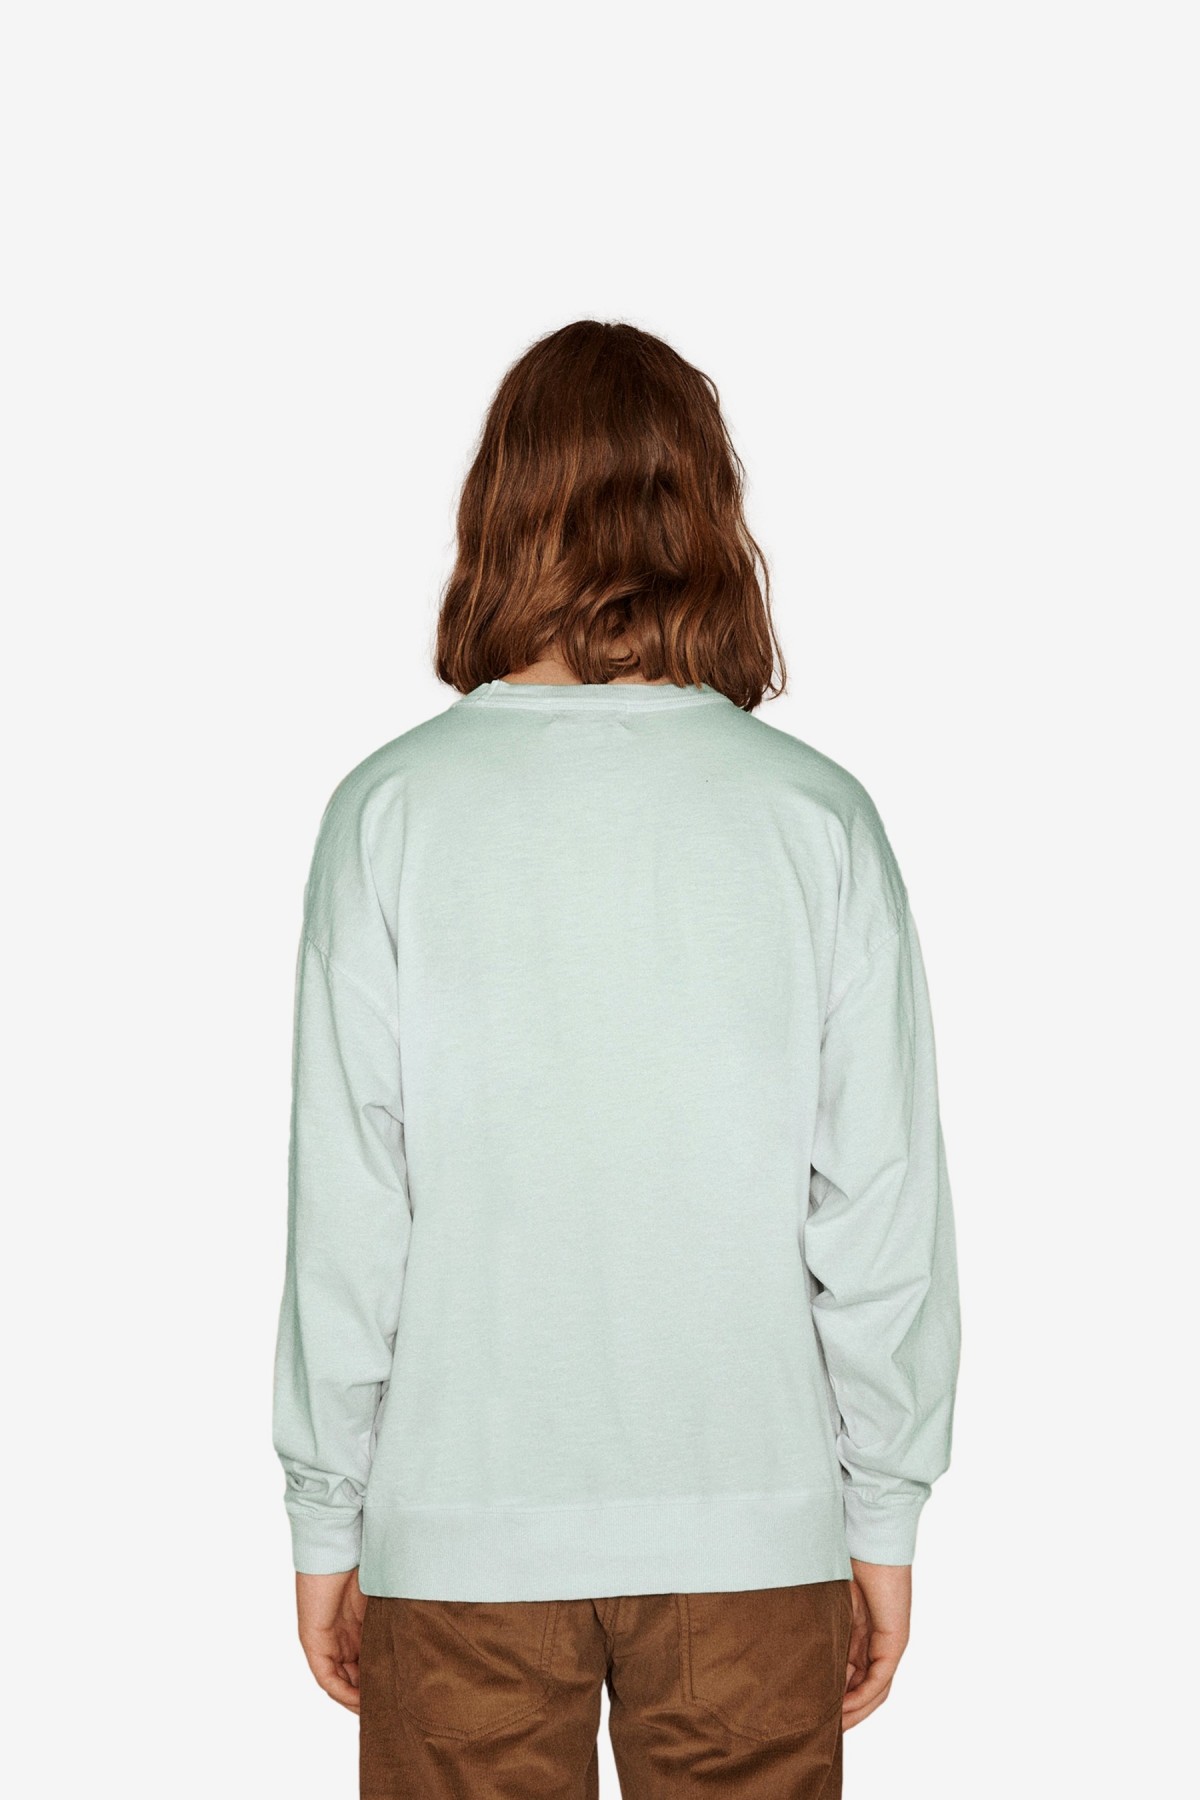 YMC You Must Create Zephyr T Shirt in Light Blue